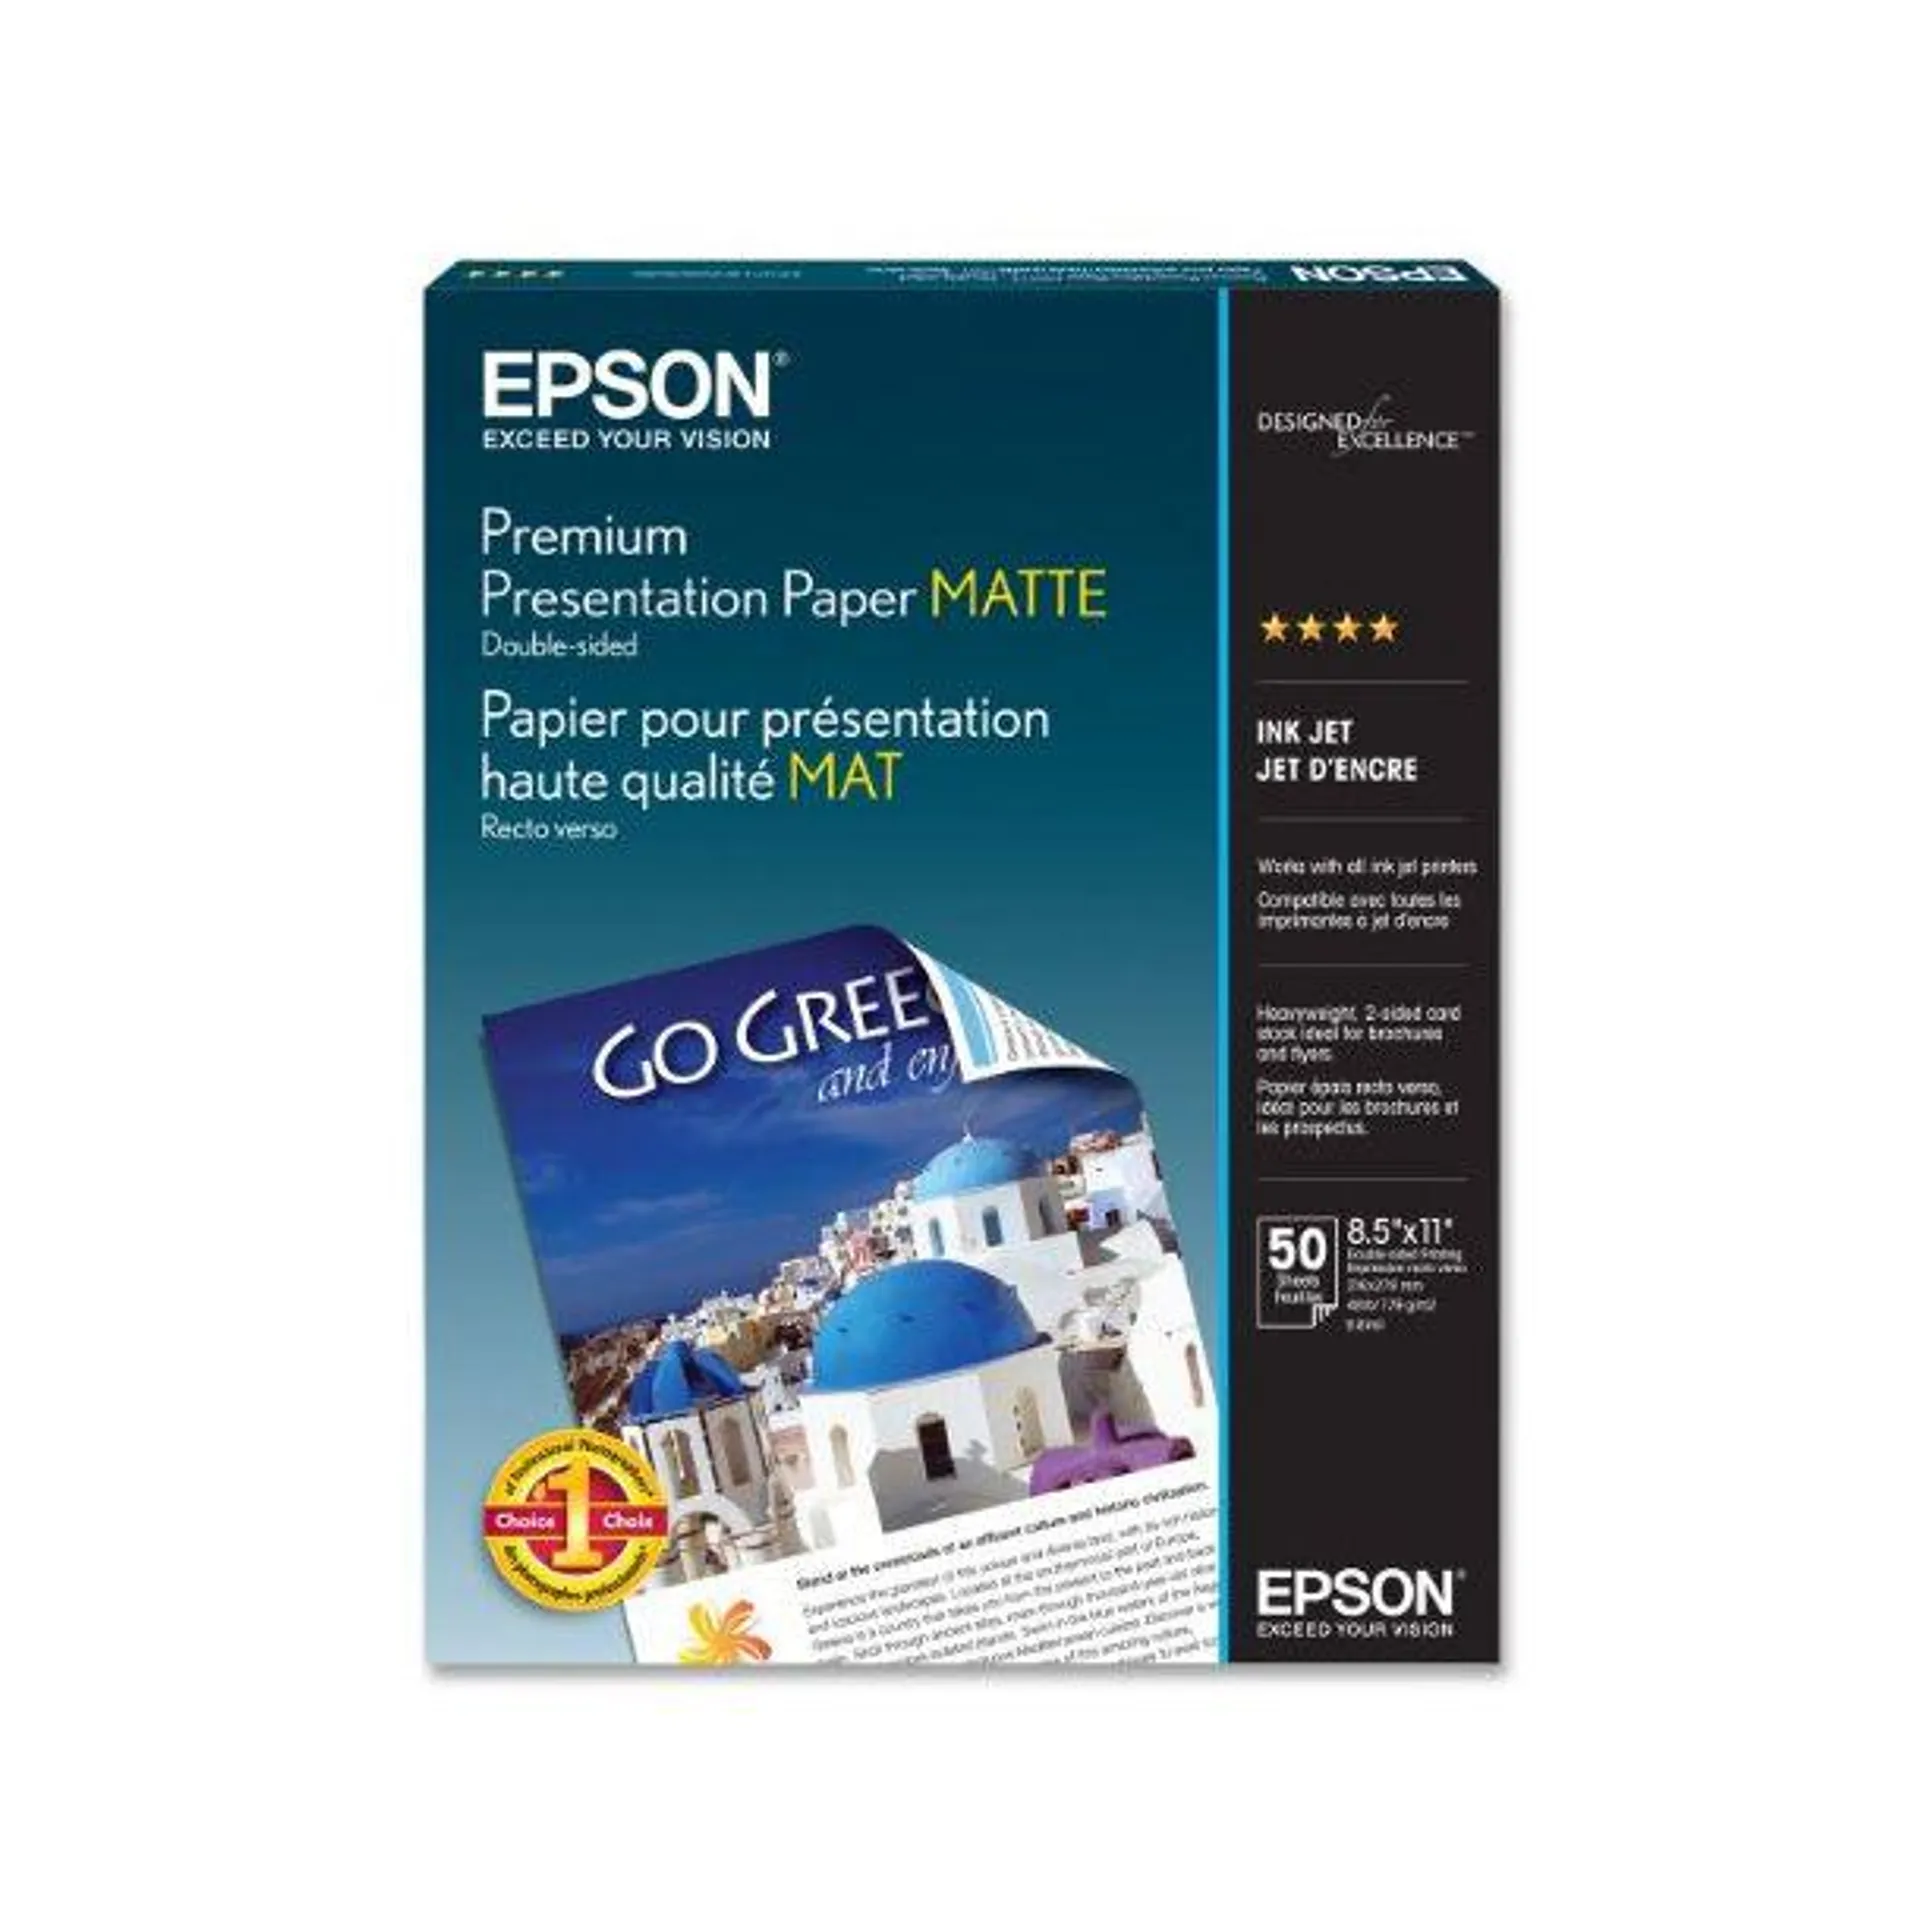 Epson Premium Presentation Paper Matte 8.5X11 Double-Sided 50 Sheets S041568 Bright White